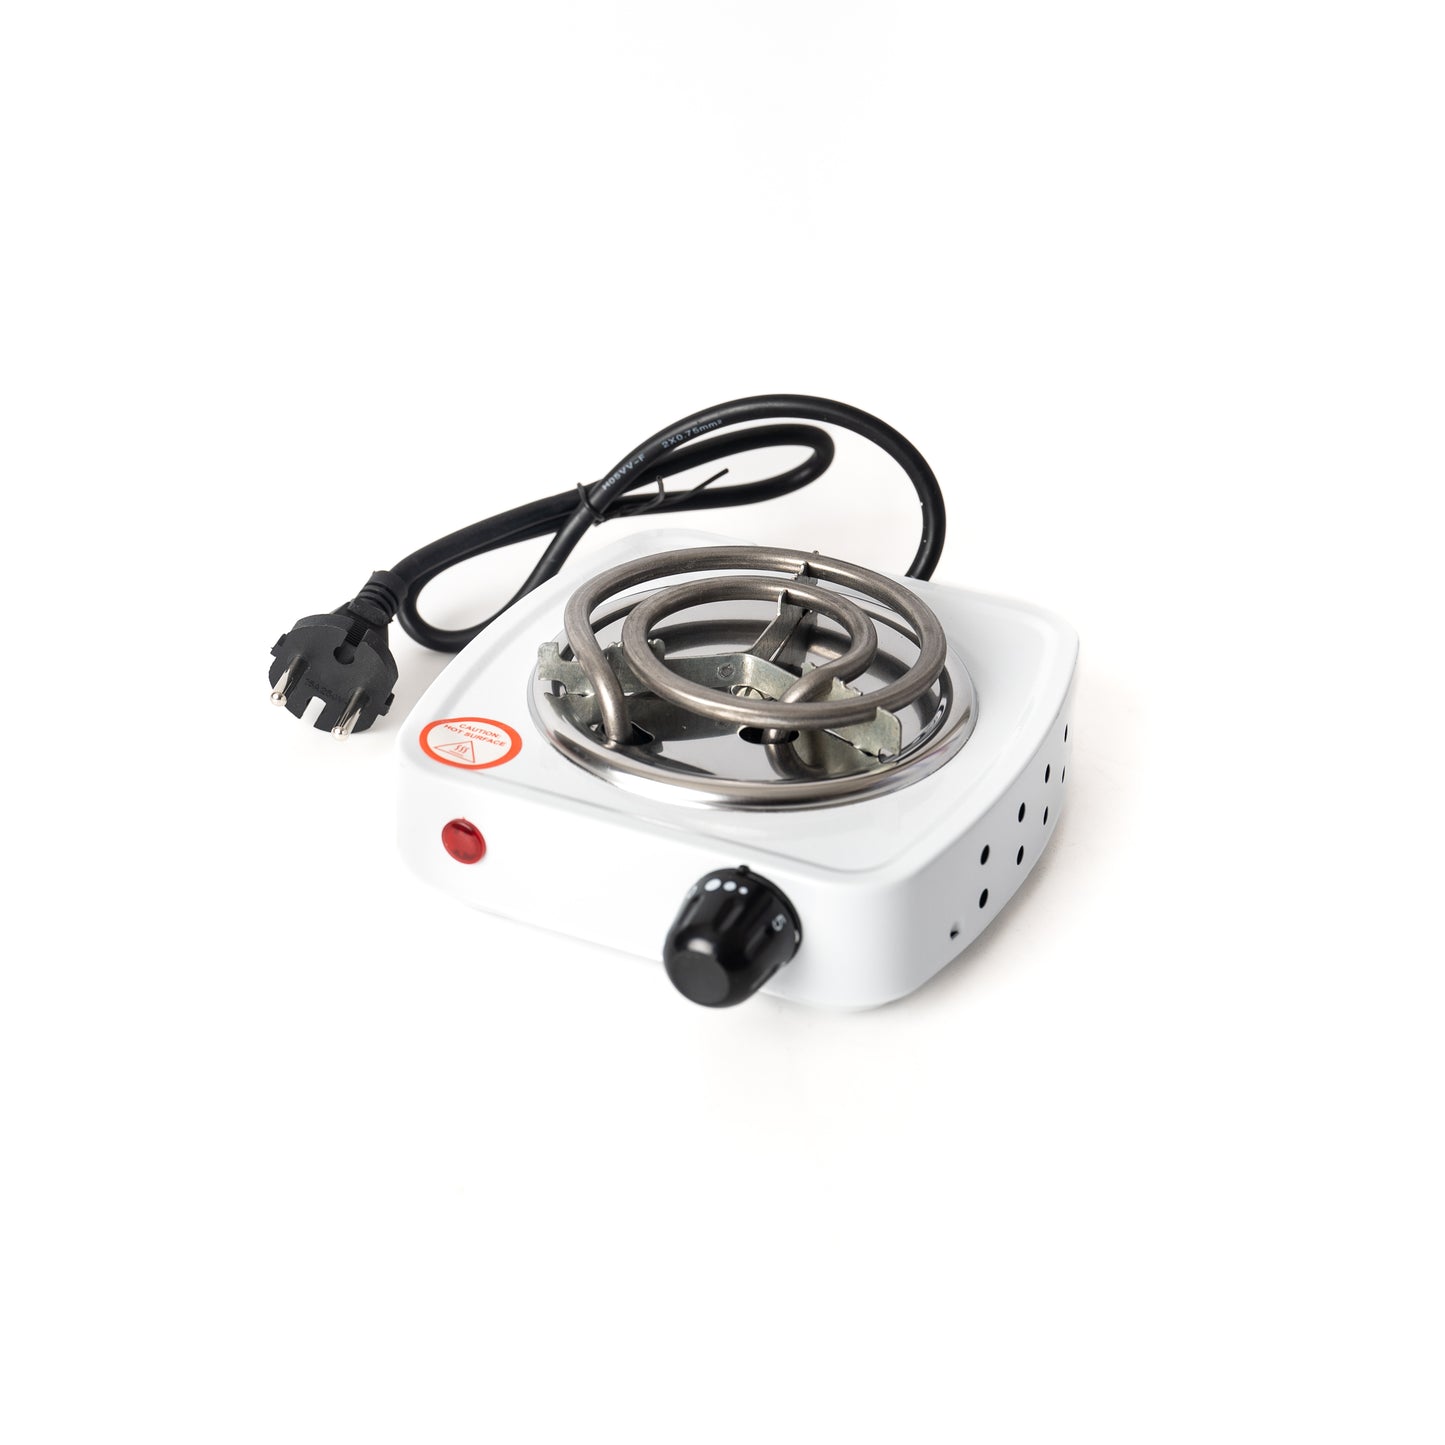 Hot Plate Charcoal Starter (Electronic Hookah Coal Burner) - 500 watt